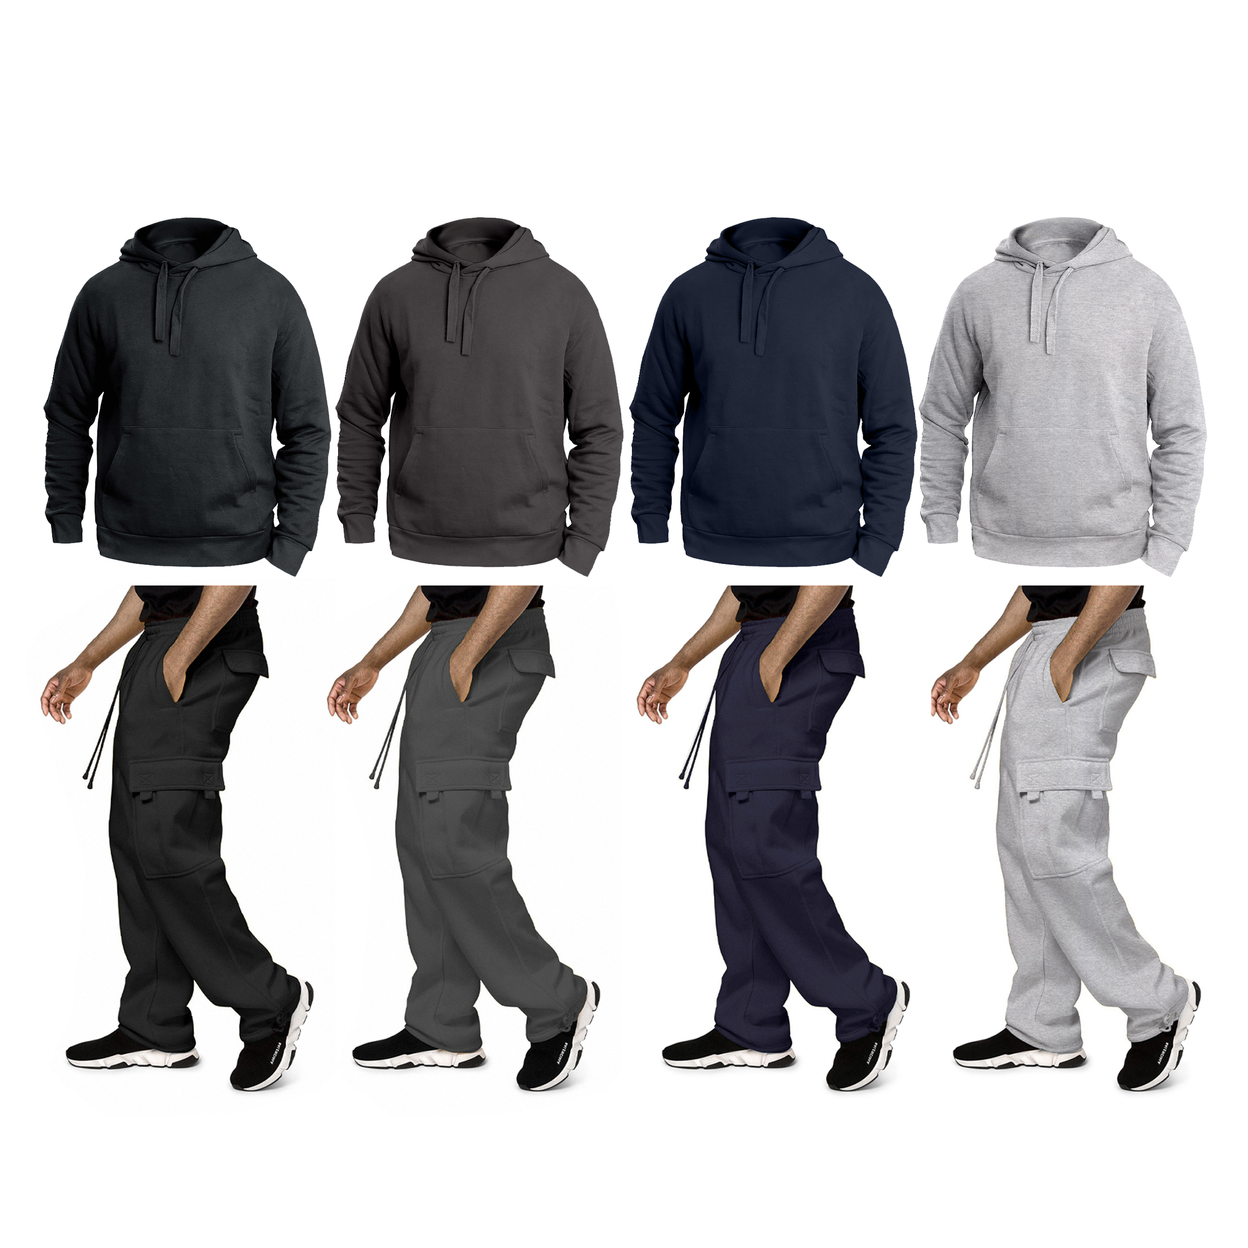 2-Pack: Men's Big & Tall Winter Warm Cozy Athletic Fleece Lined Multi-Pocket Cargo Sweatsuit - Charcoal, 3xl